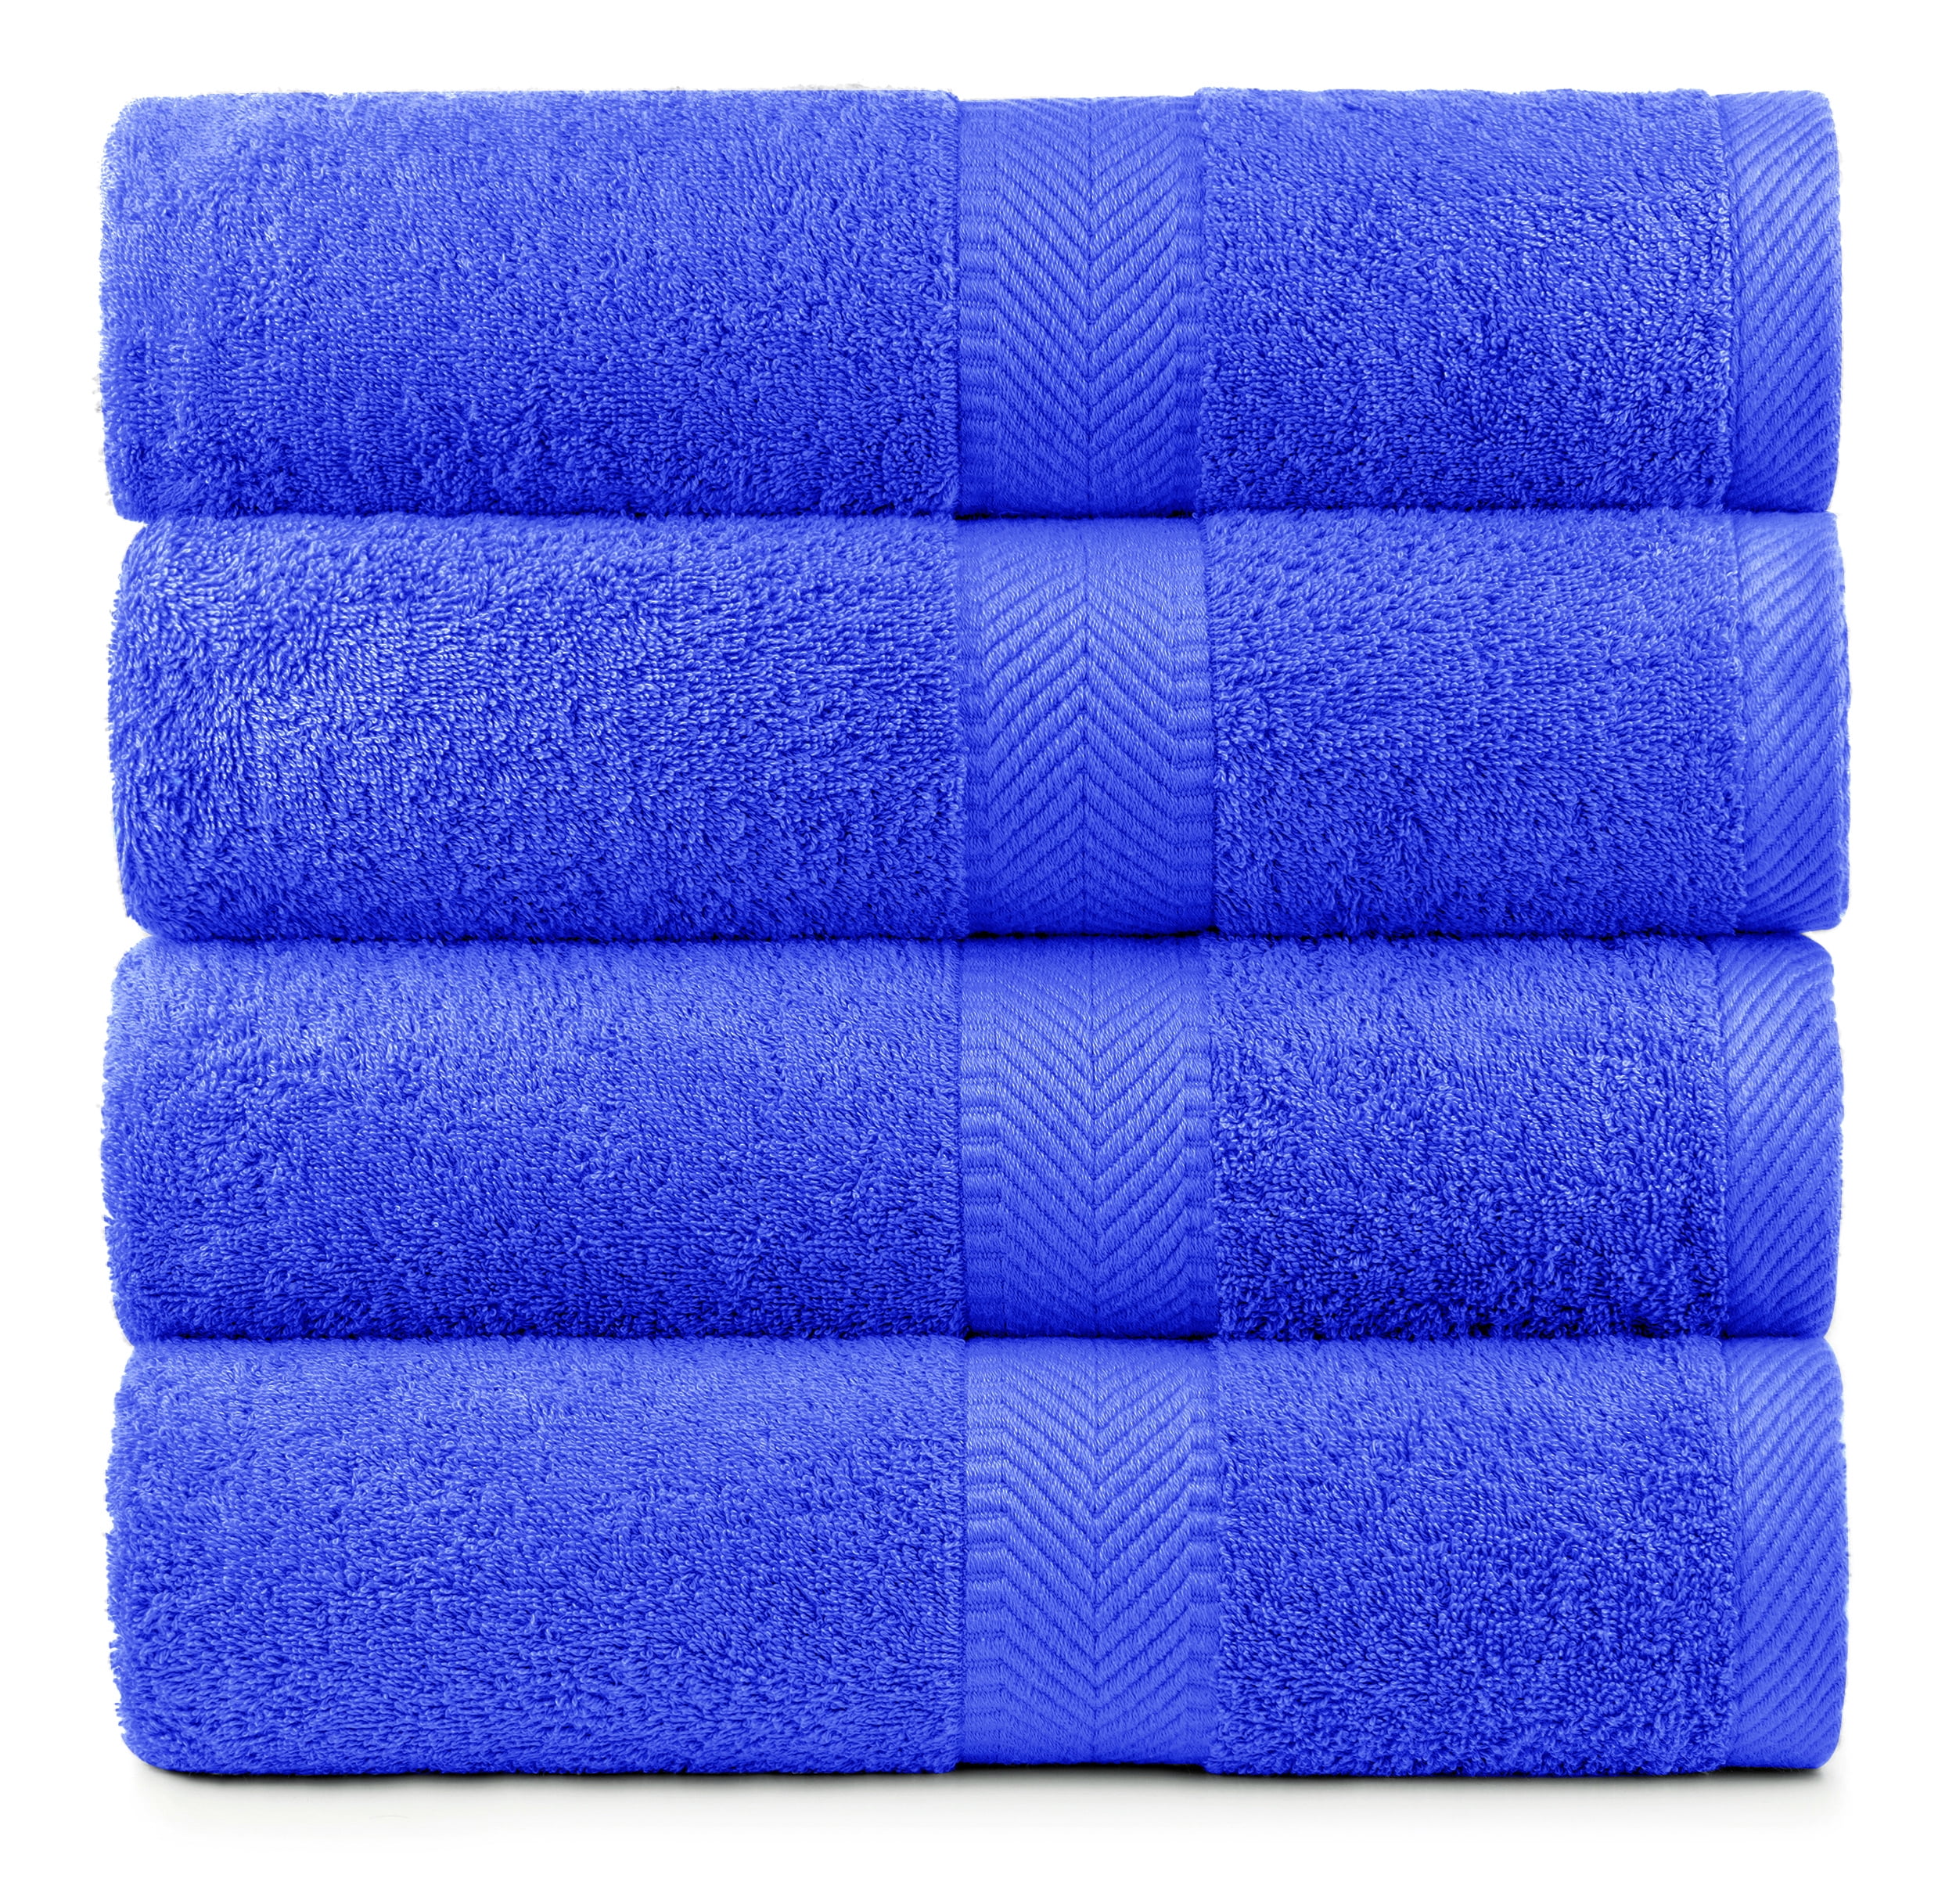 Jones Stephens Cotton Terry Cloth Towels 8 Pack B05026